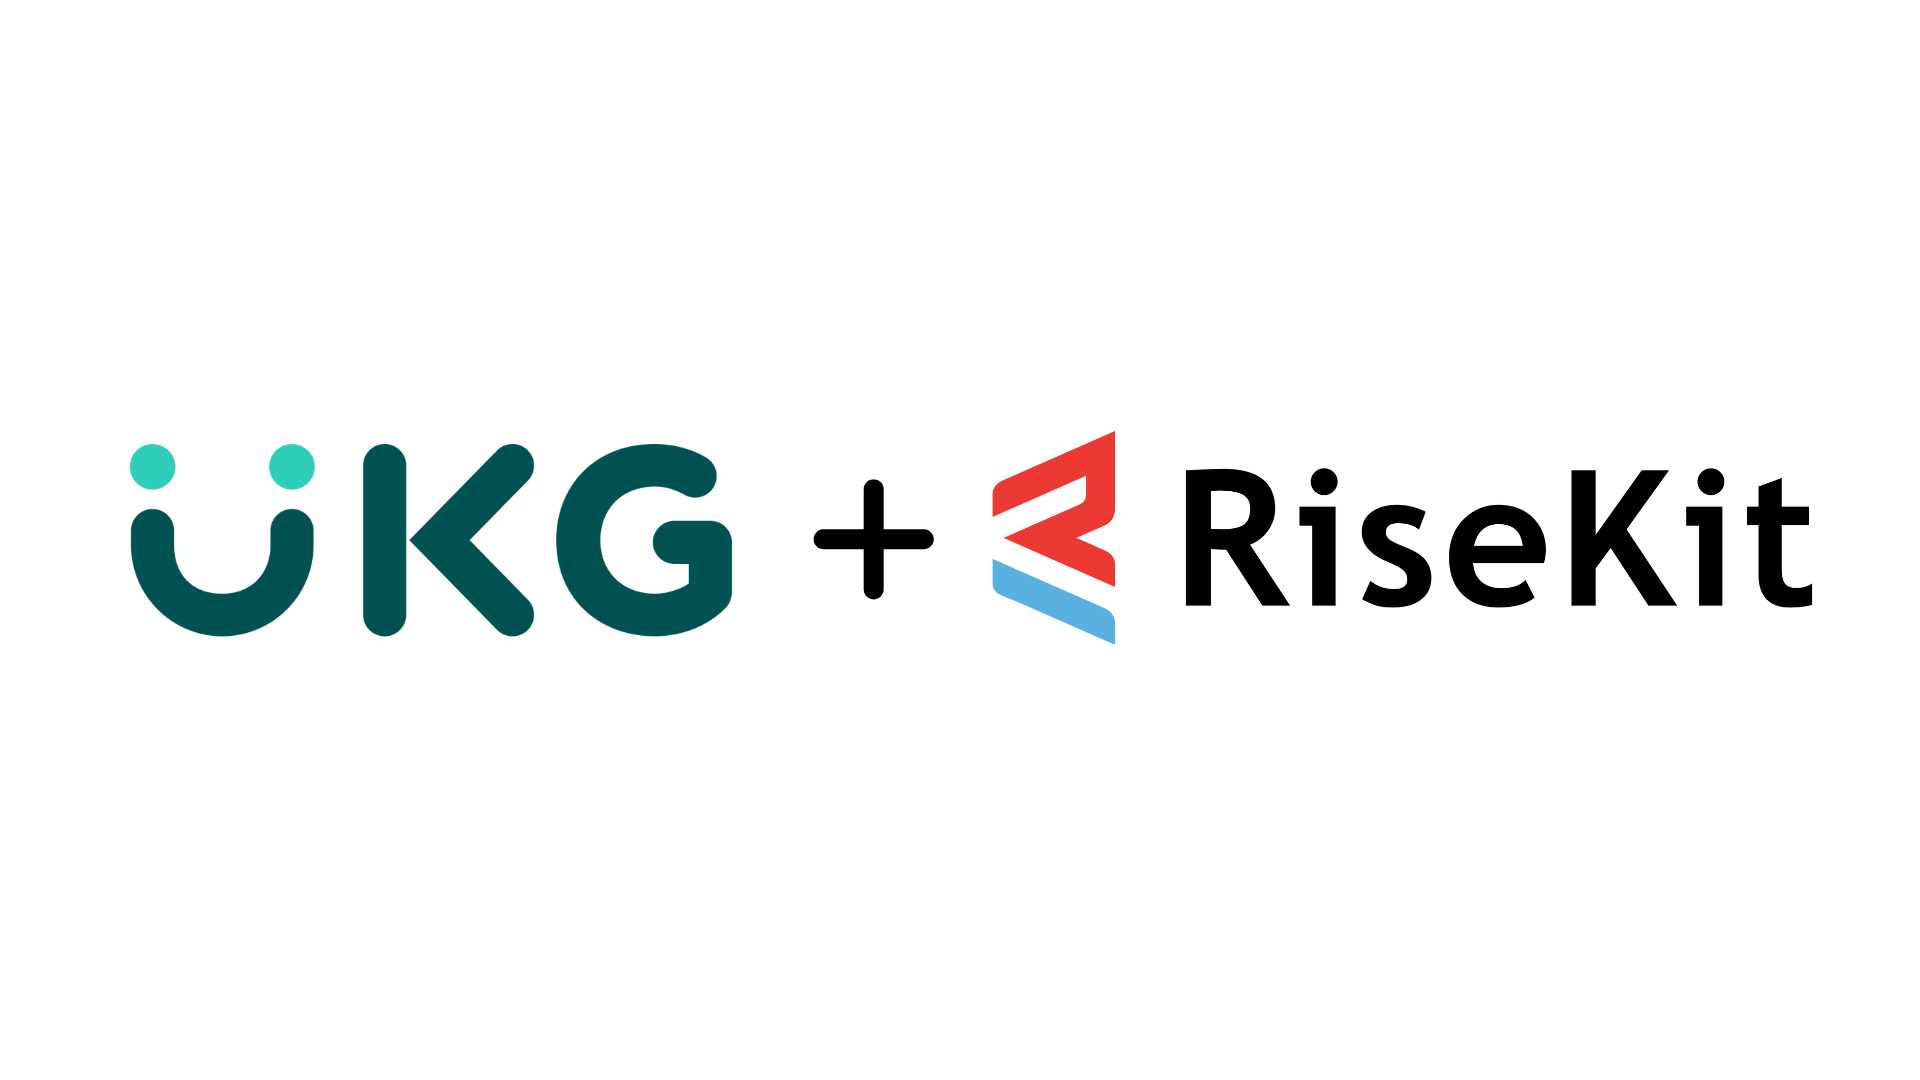 UKG and RiseKit logos representing a partnership